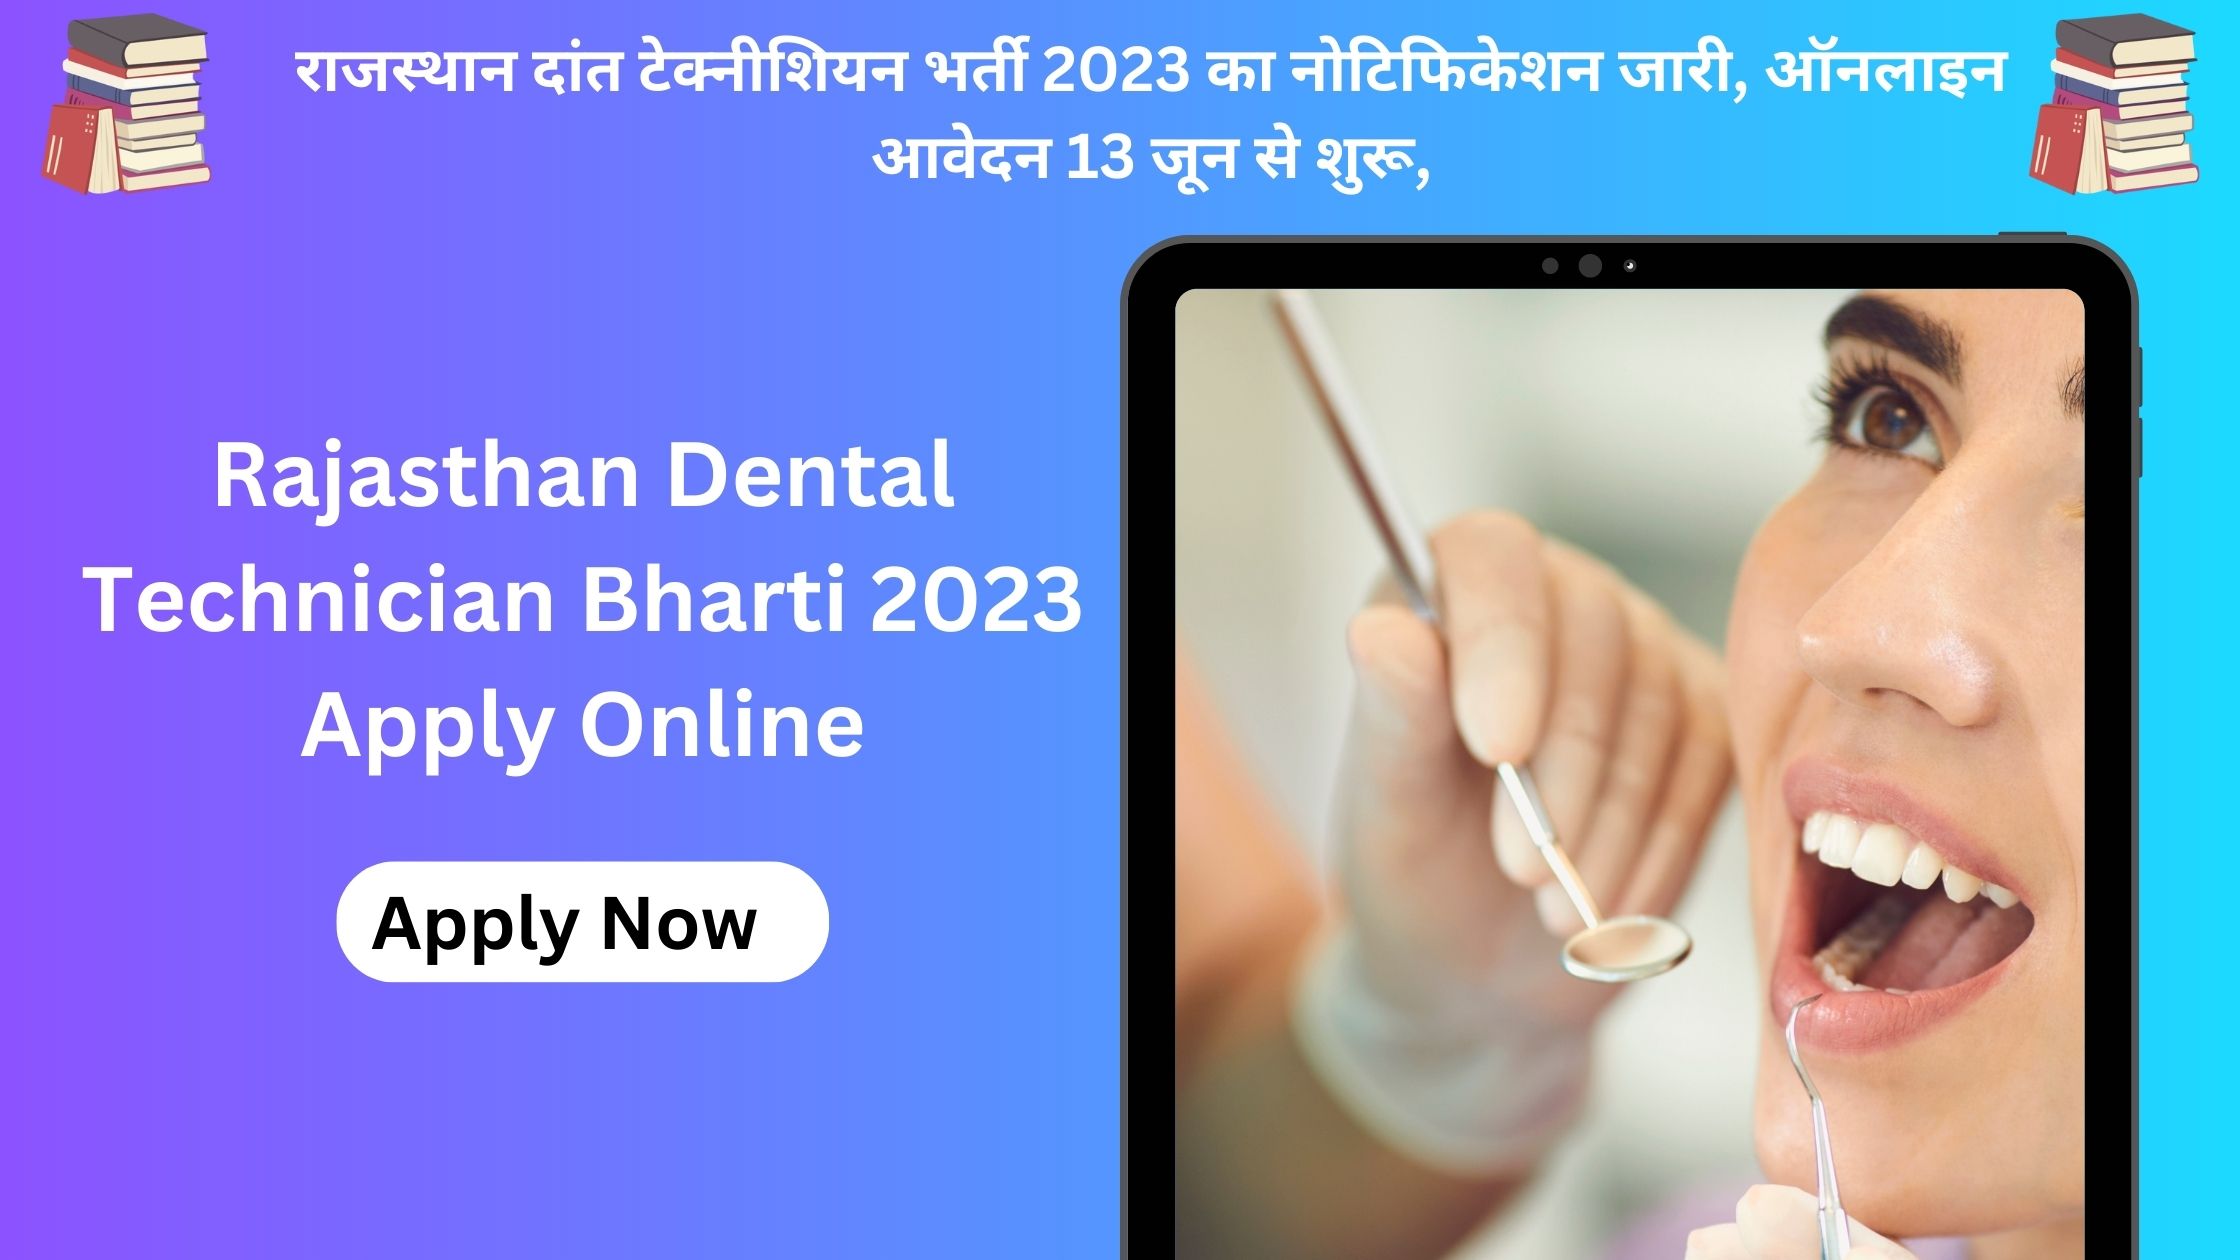 Rajasthan Dental Technician Bharti 2023 Apply Online